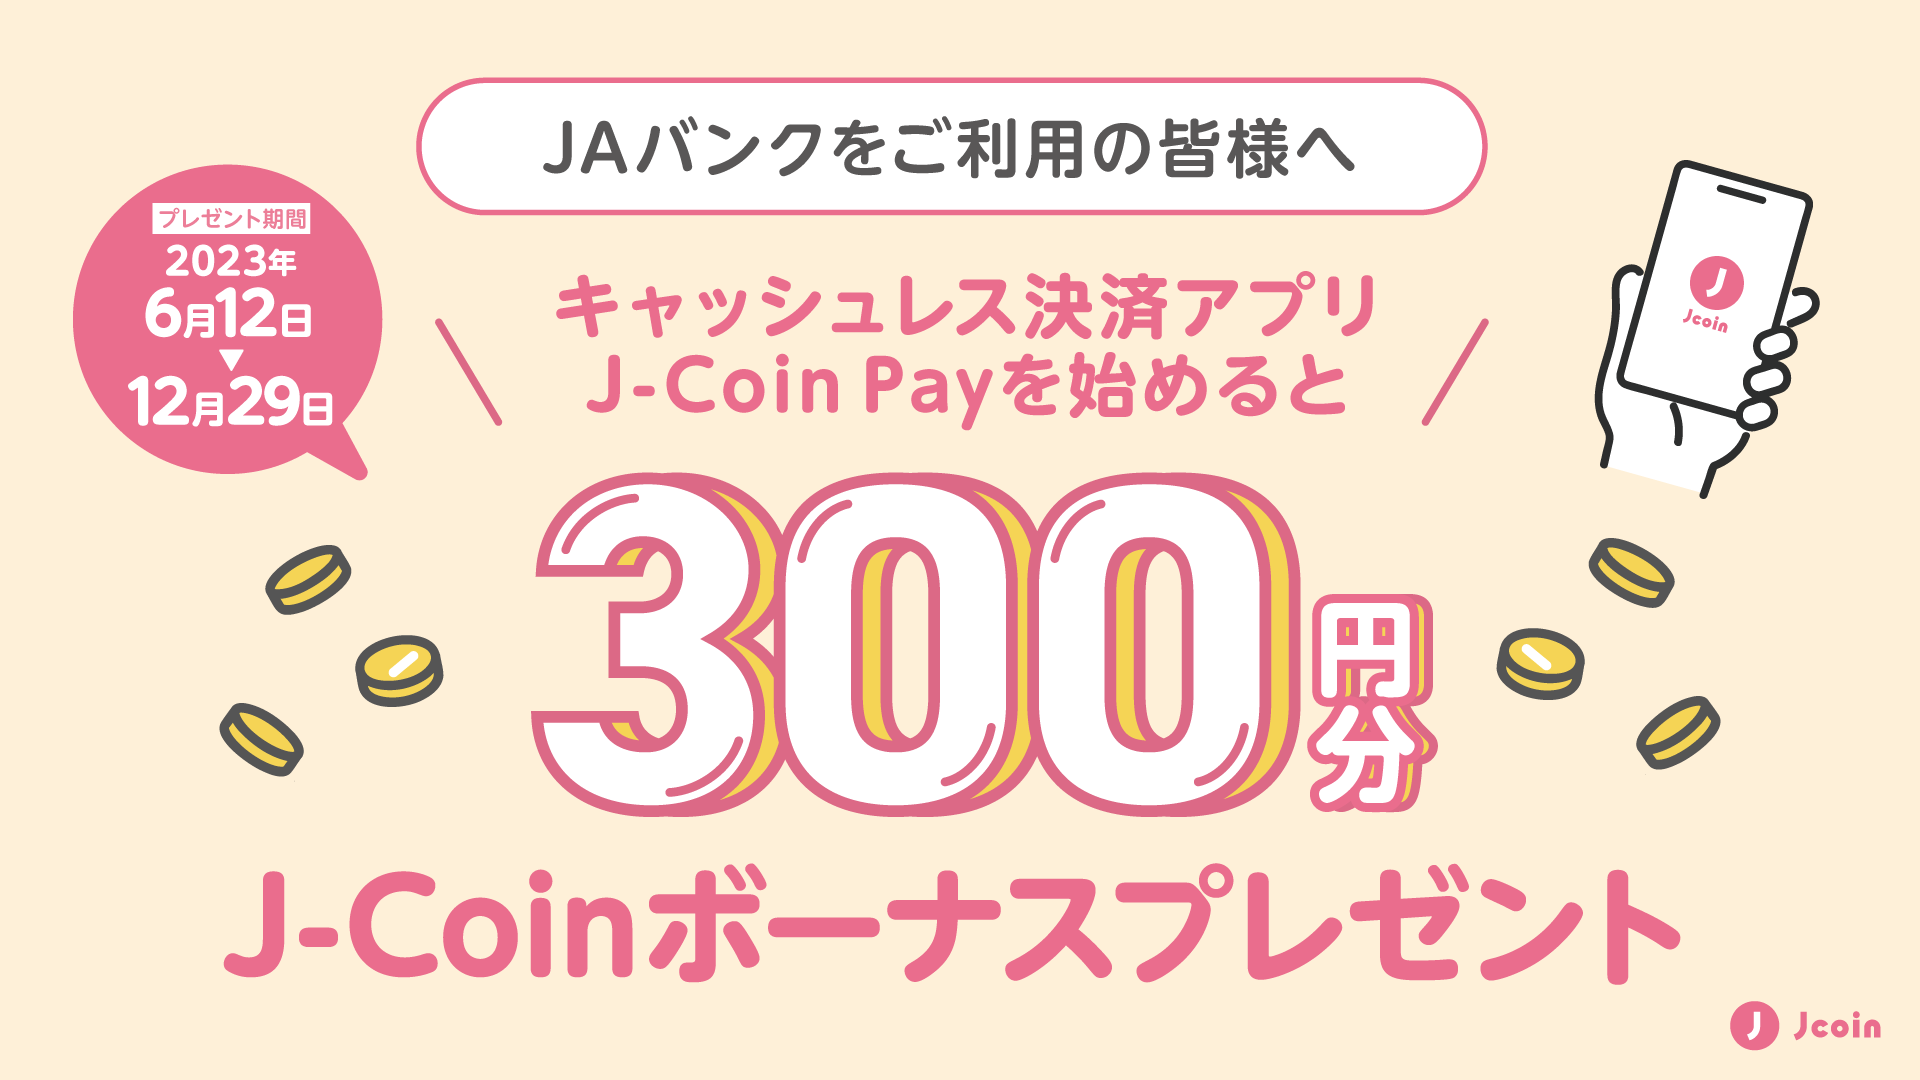 J-Coin